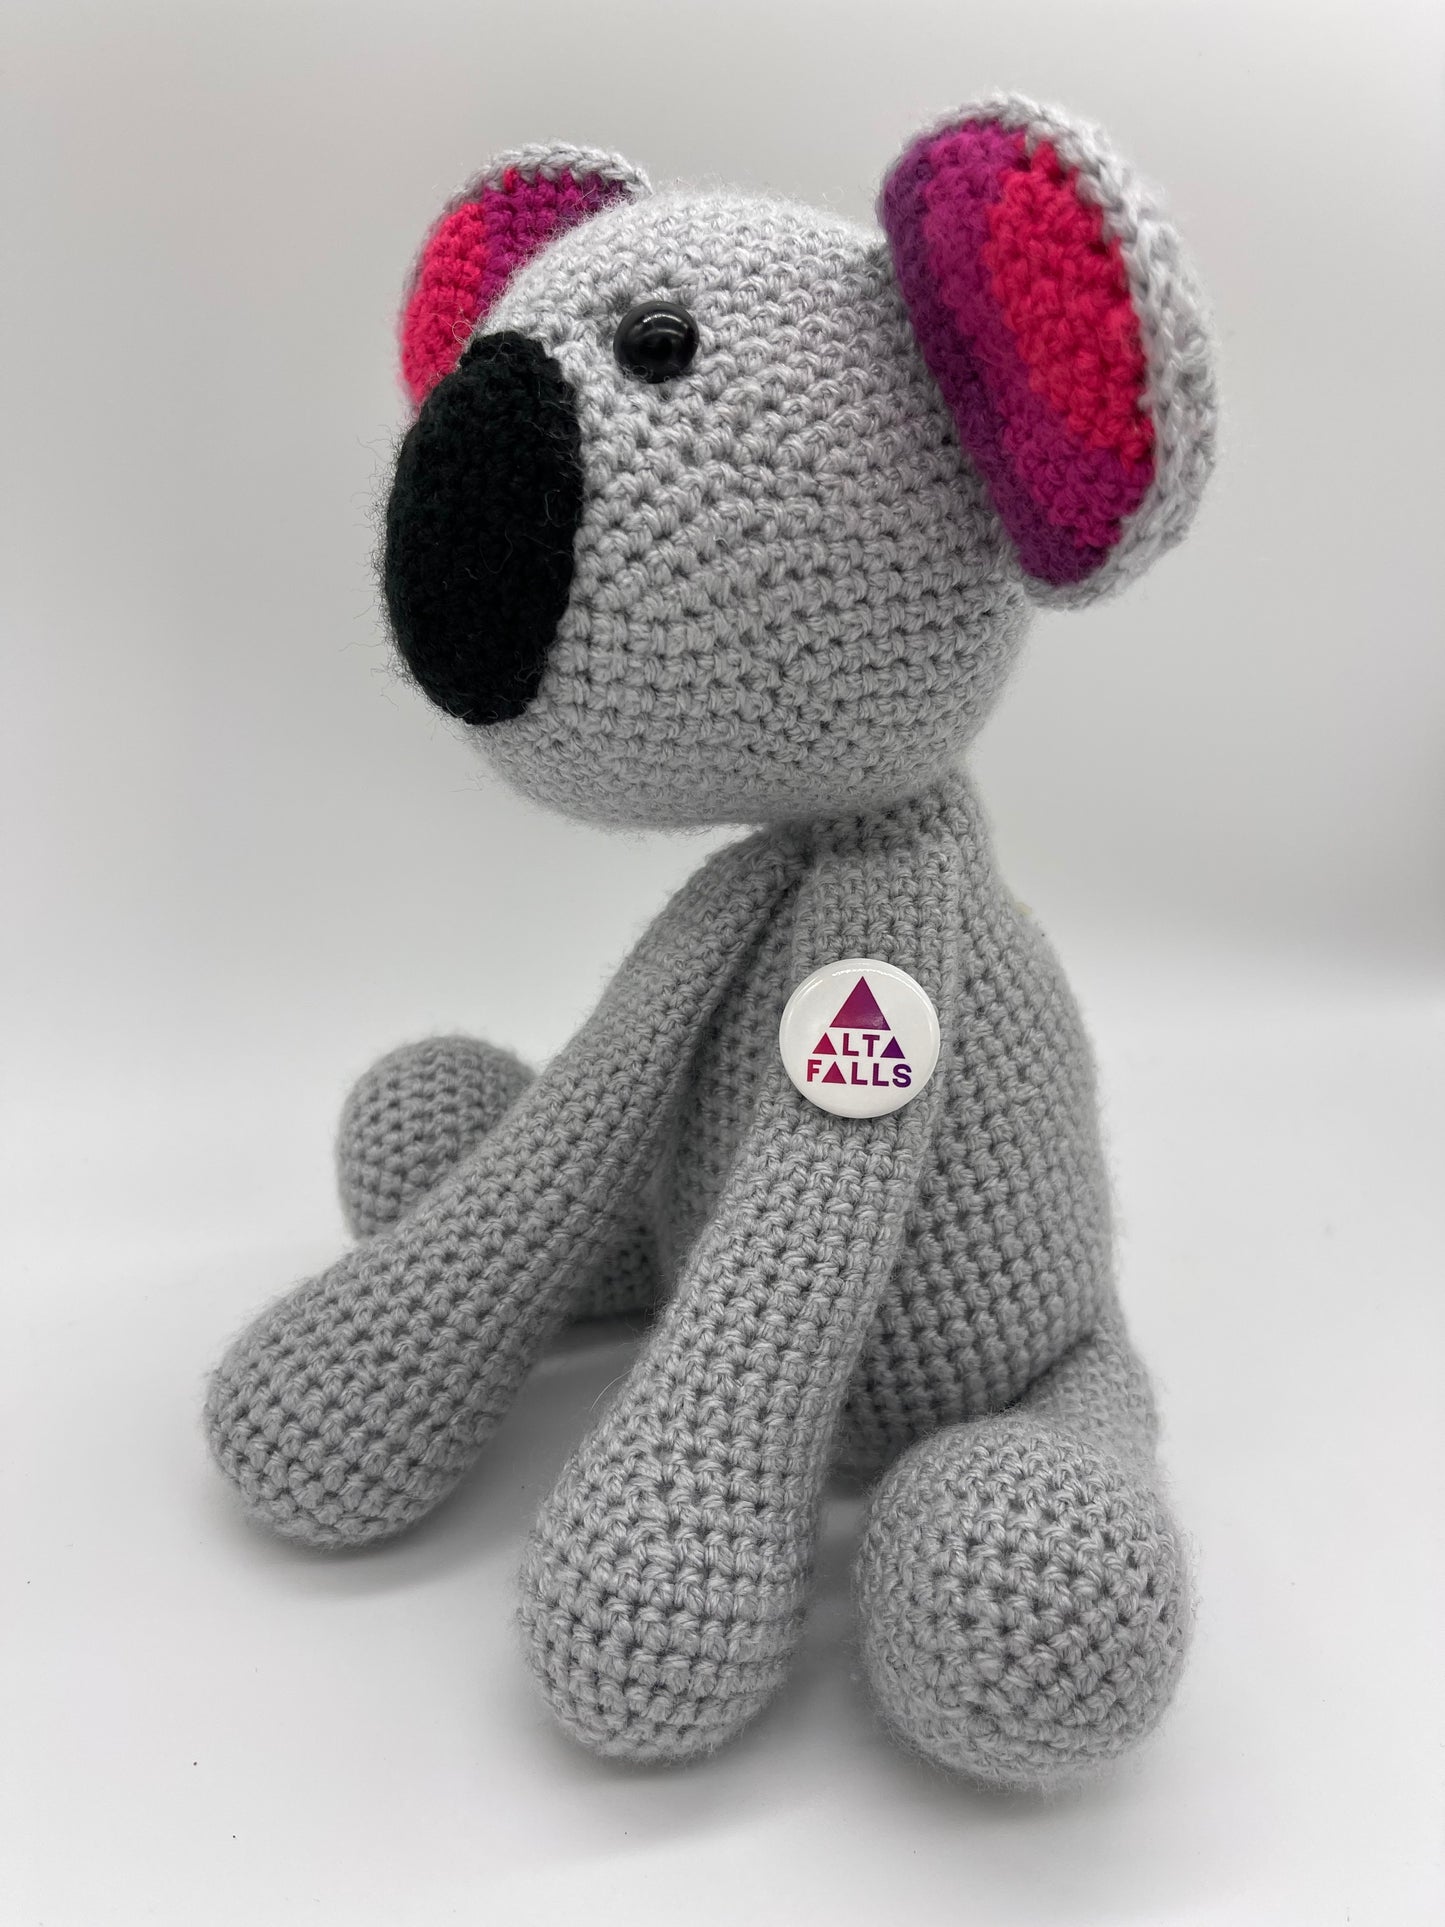 Handmade Crochet Alta Falls 'Dave The Koala' (inc. AF badge)